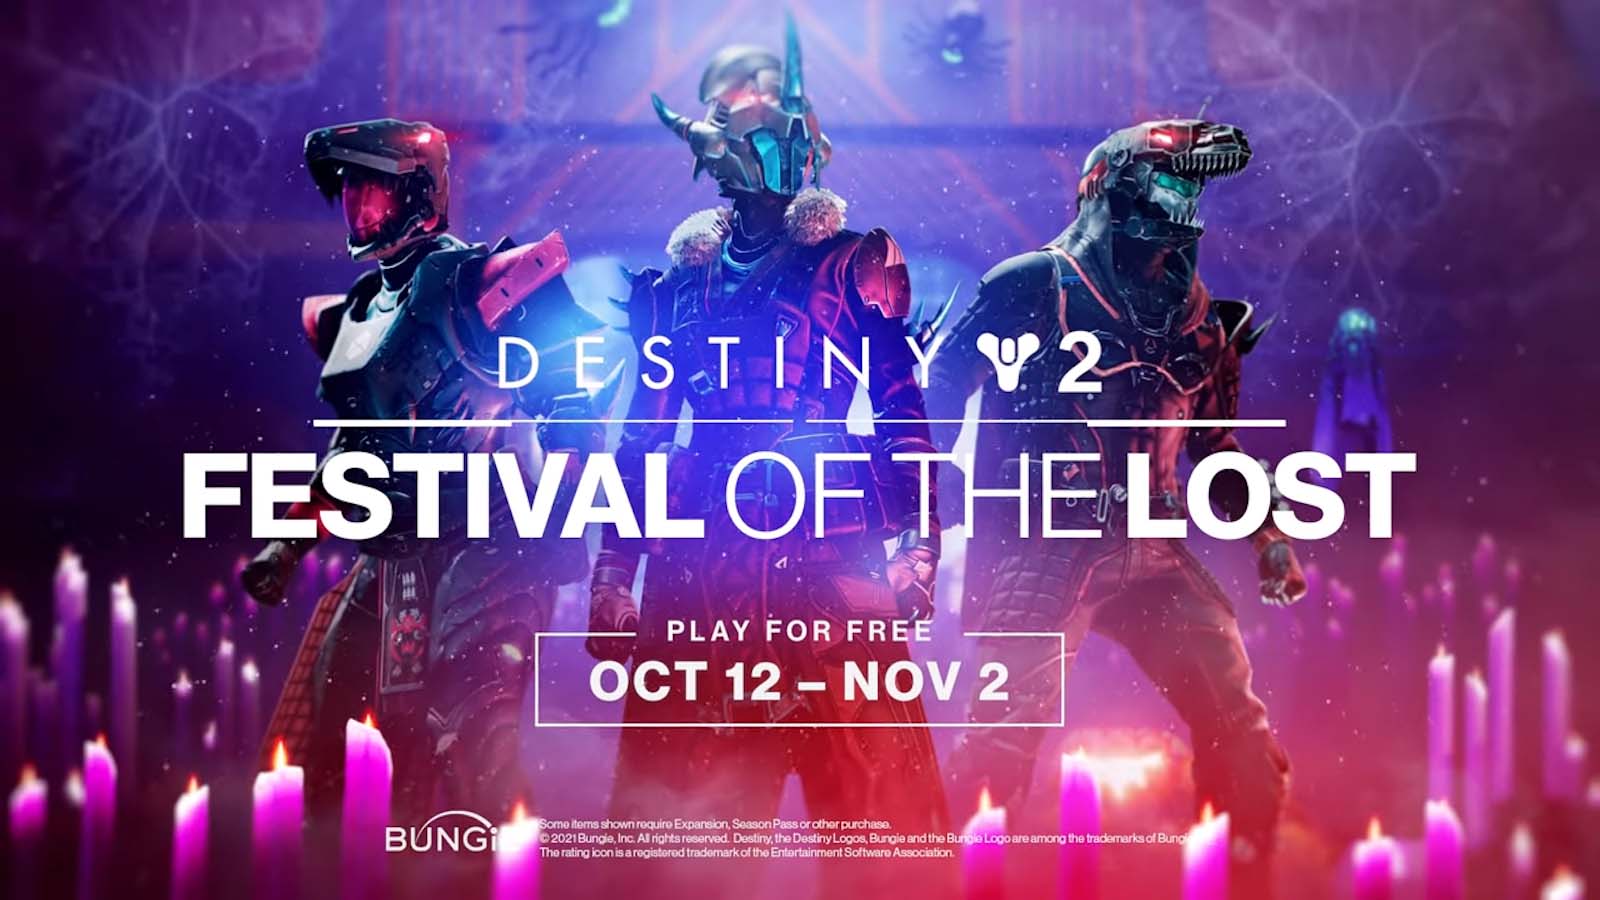 Destiny 2: Twitch Prime Gaming Rewards For October 2021